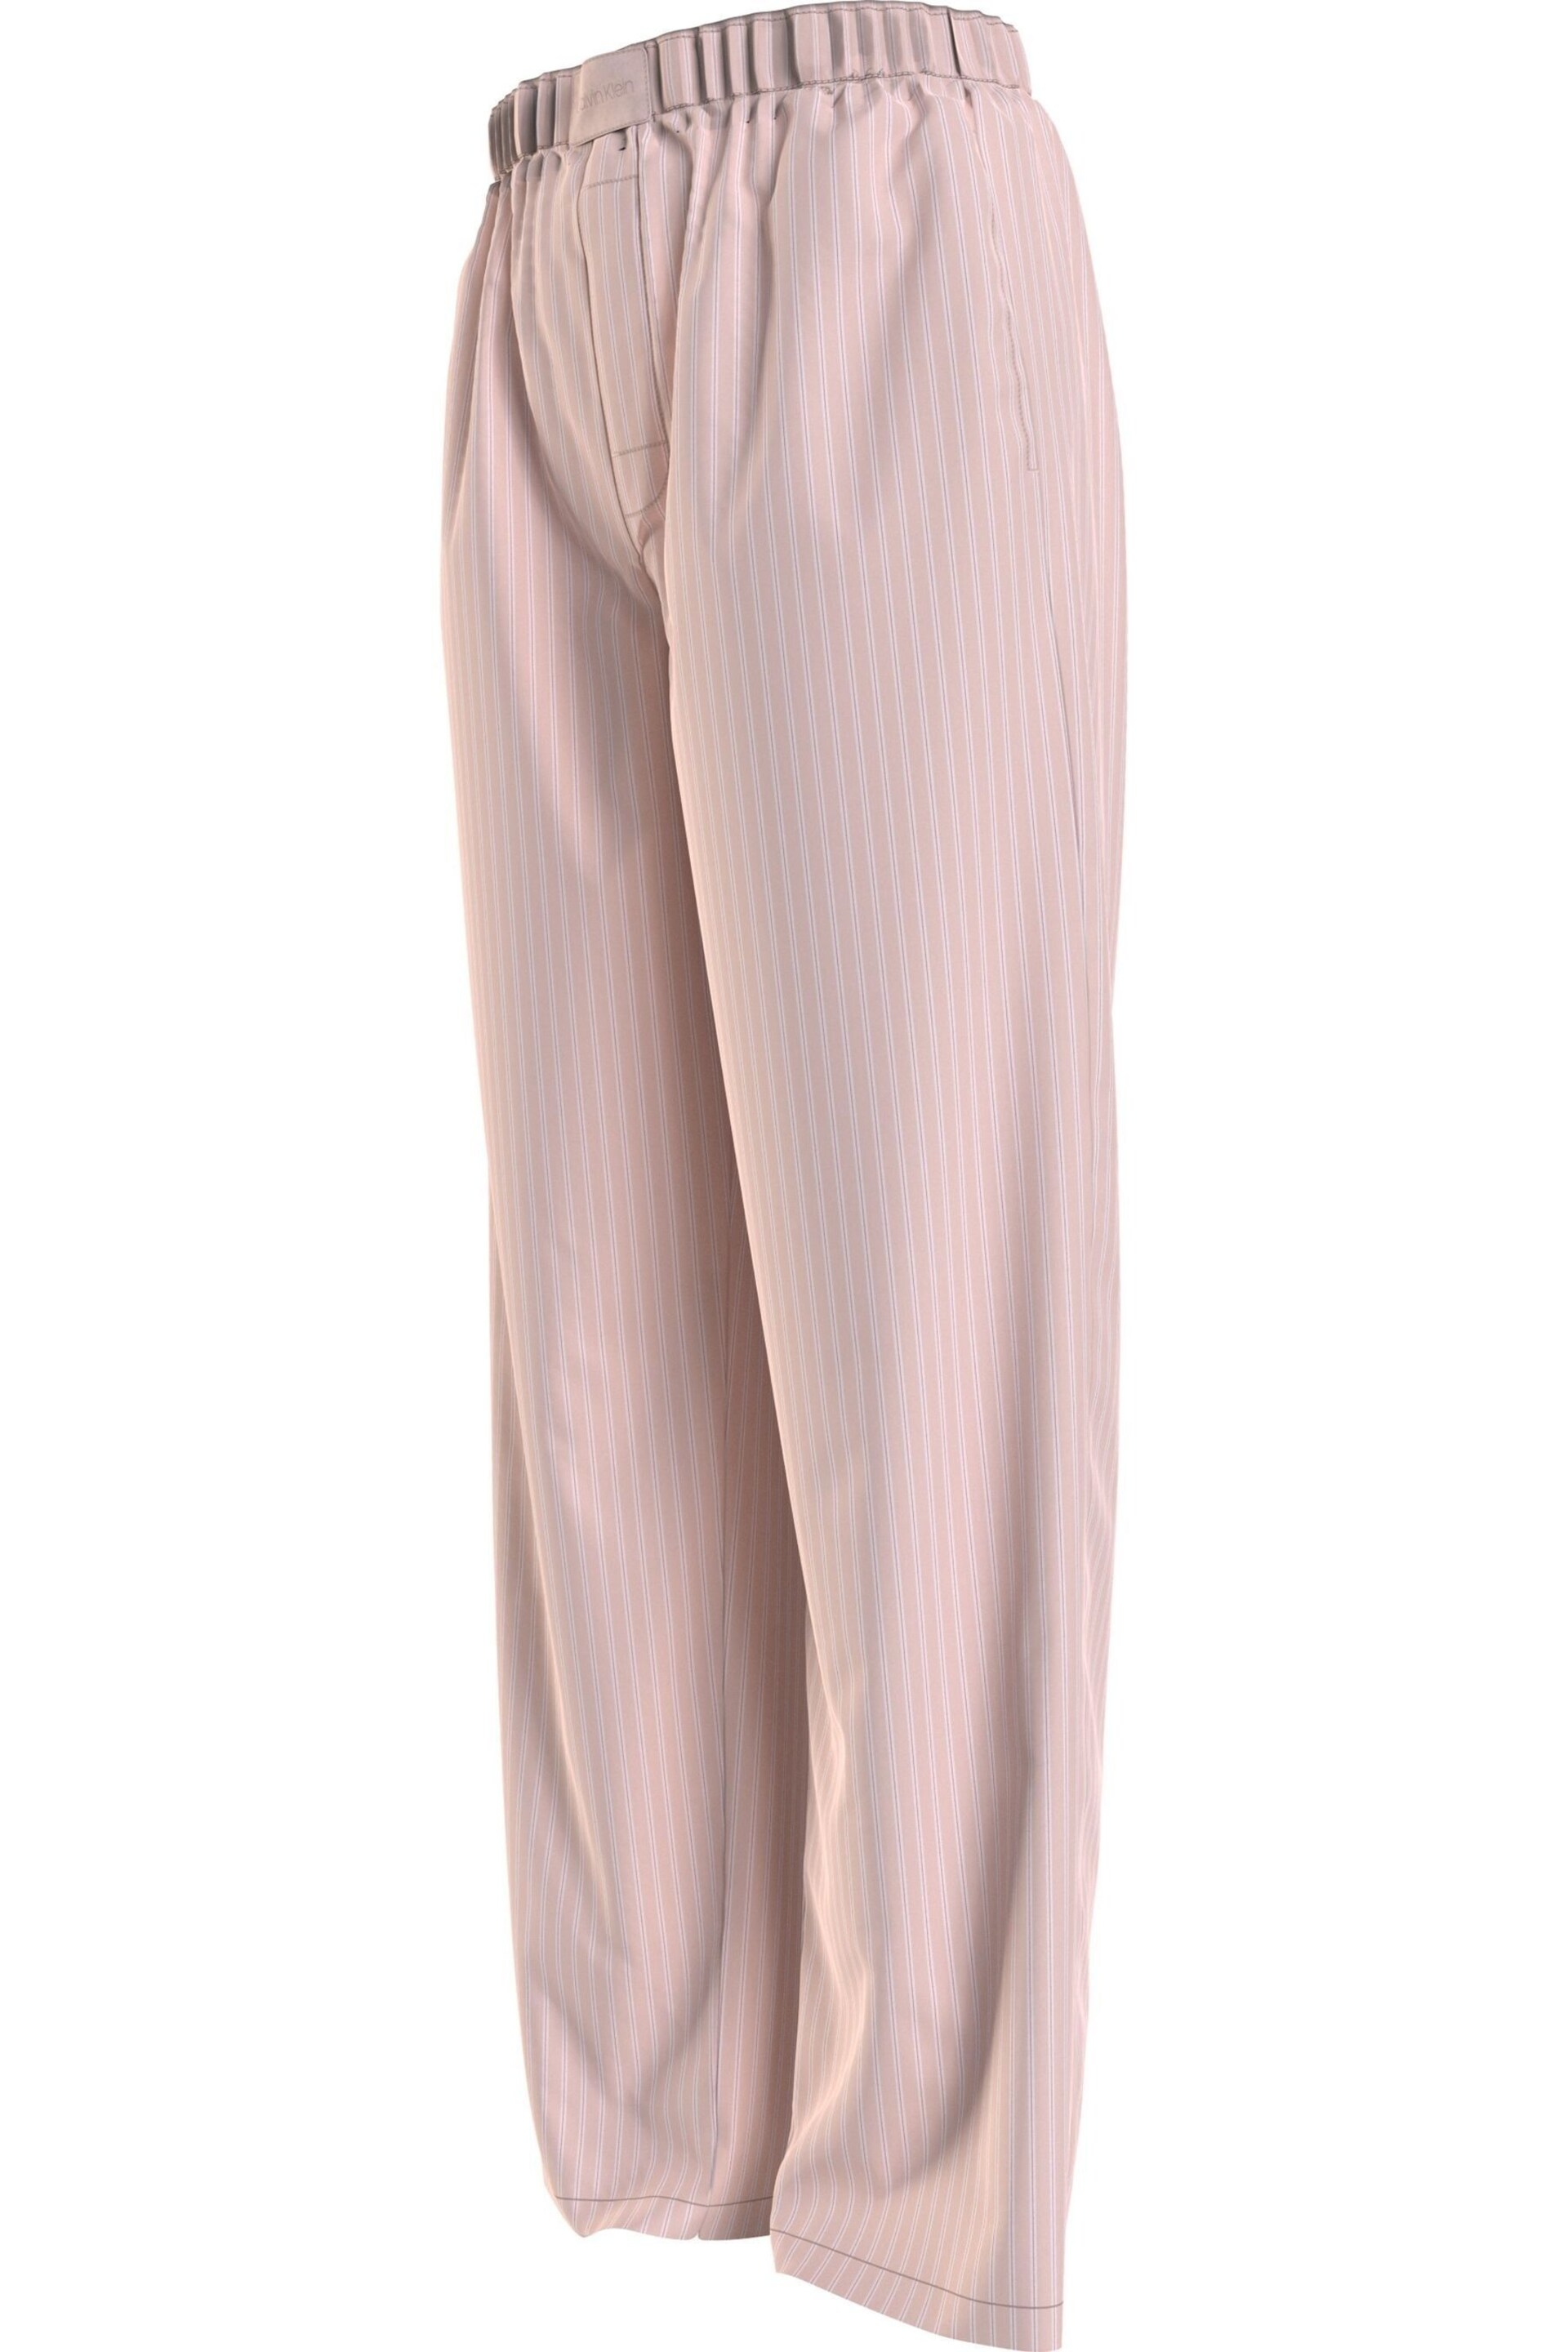 Calvin Klein Pink Stripe Single Trousers - Image 5 of 5